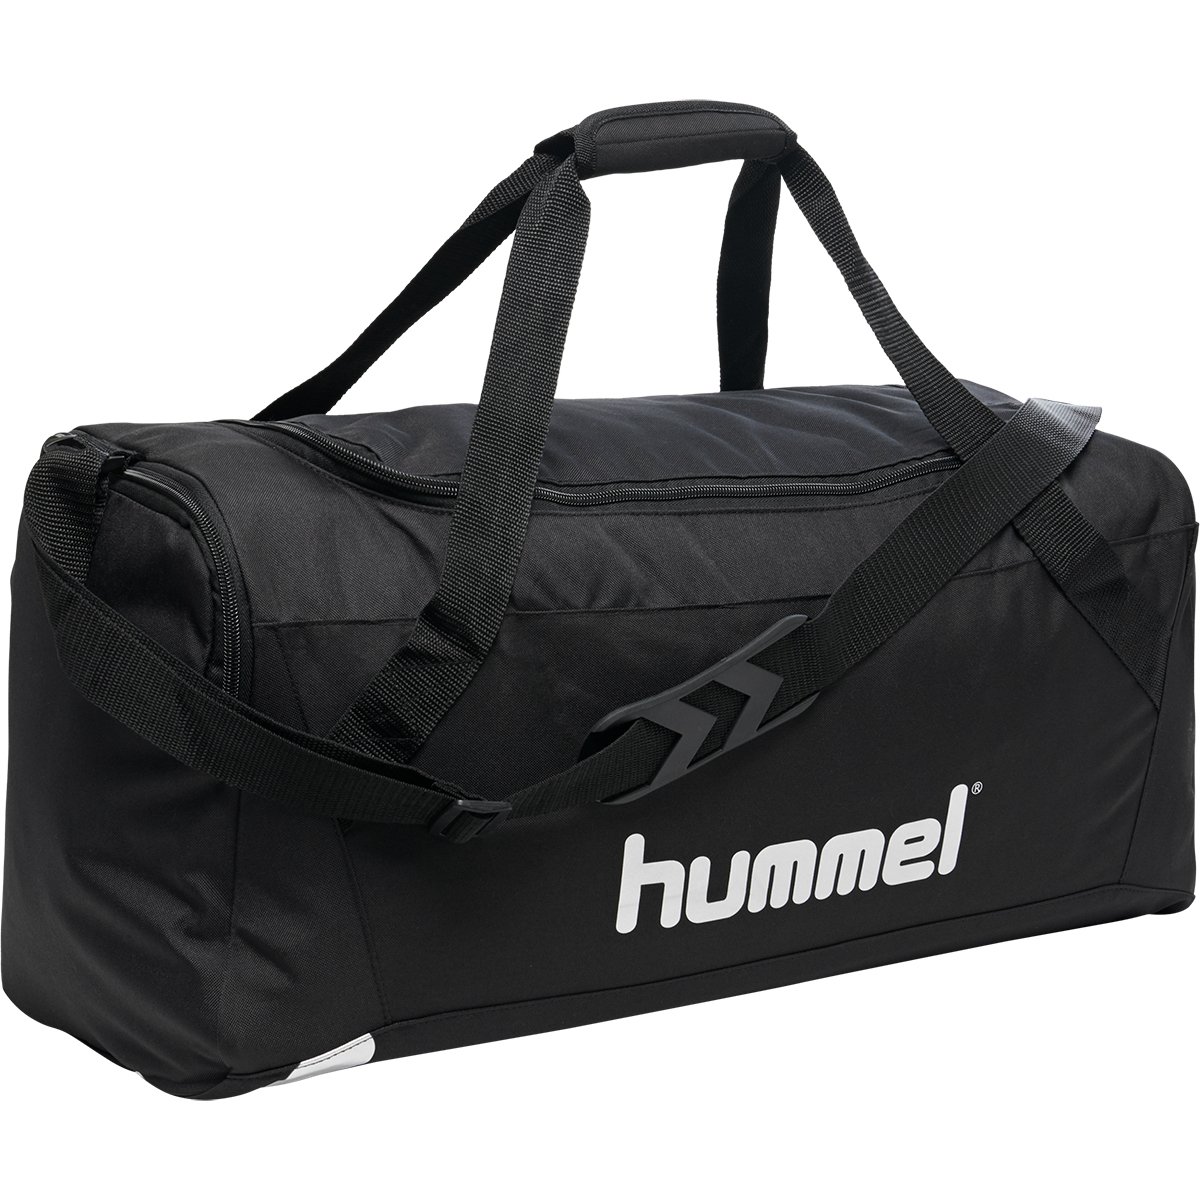 13: Hummel Core Sportstaske - Large, sort